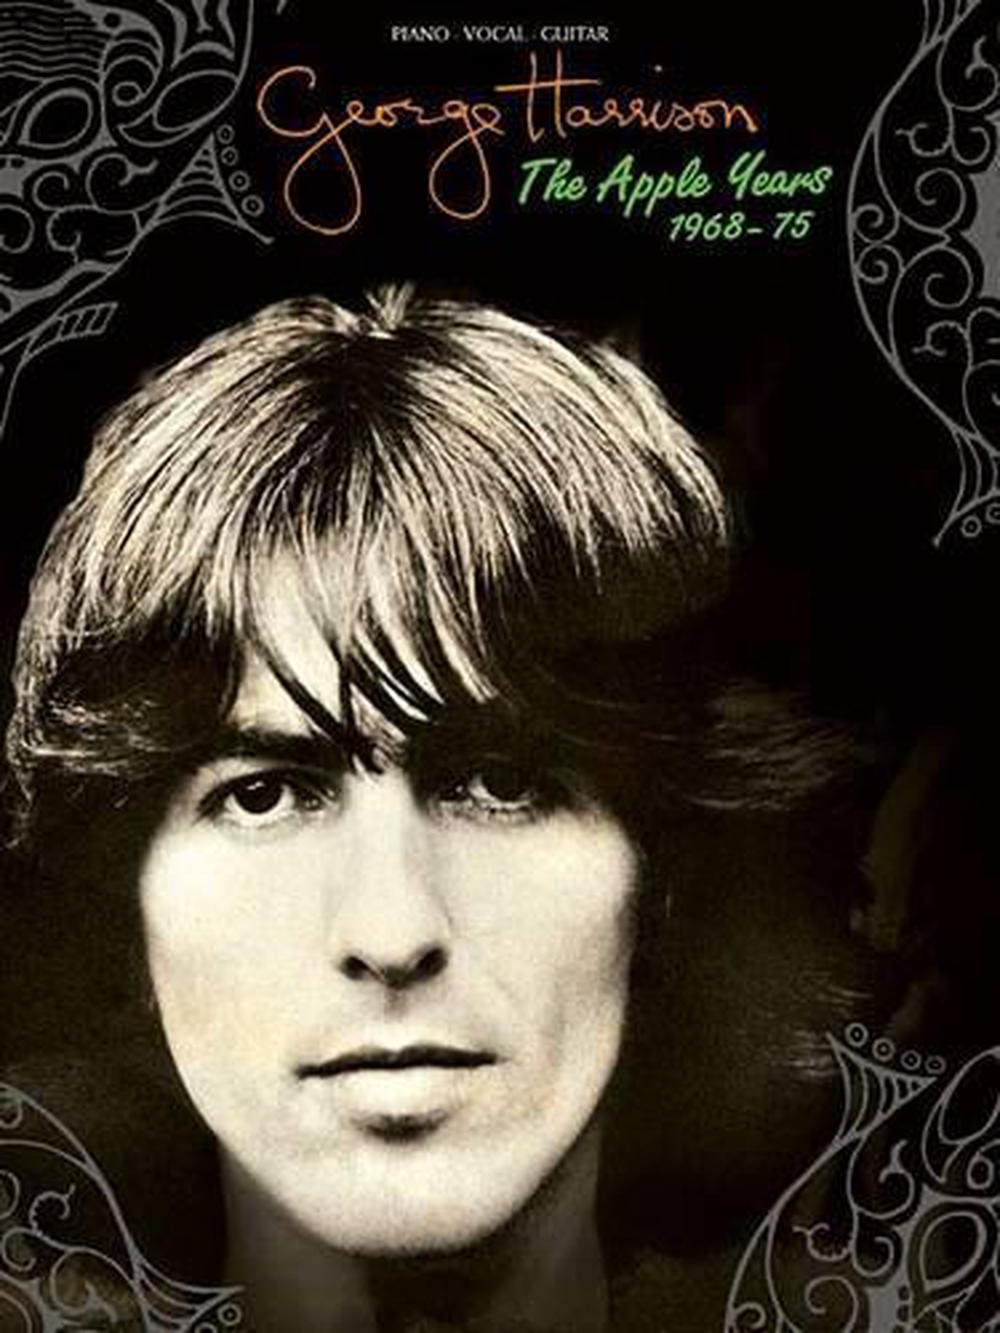 George Harrison - The Apple Years by George Harrison ...